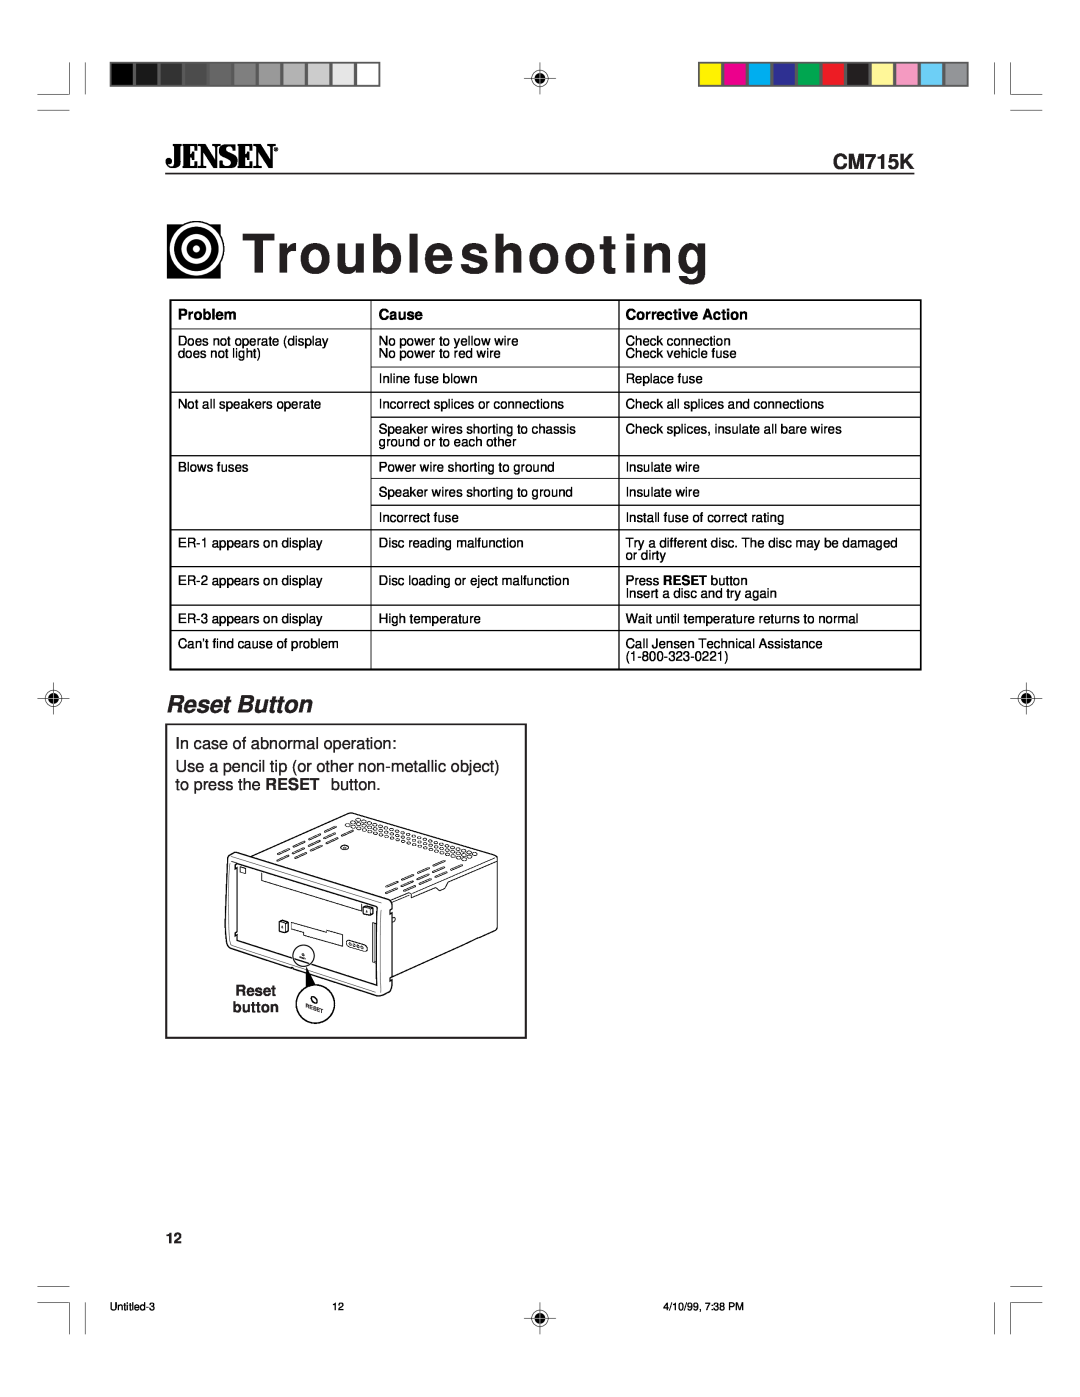 Jensen CM715K specifications Troubleshooting, Reset Button, Problem, Cause, Corrective Action, Reset button 